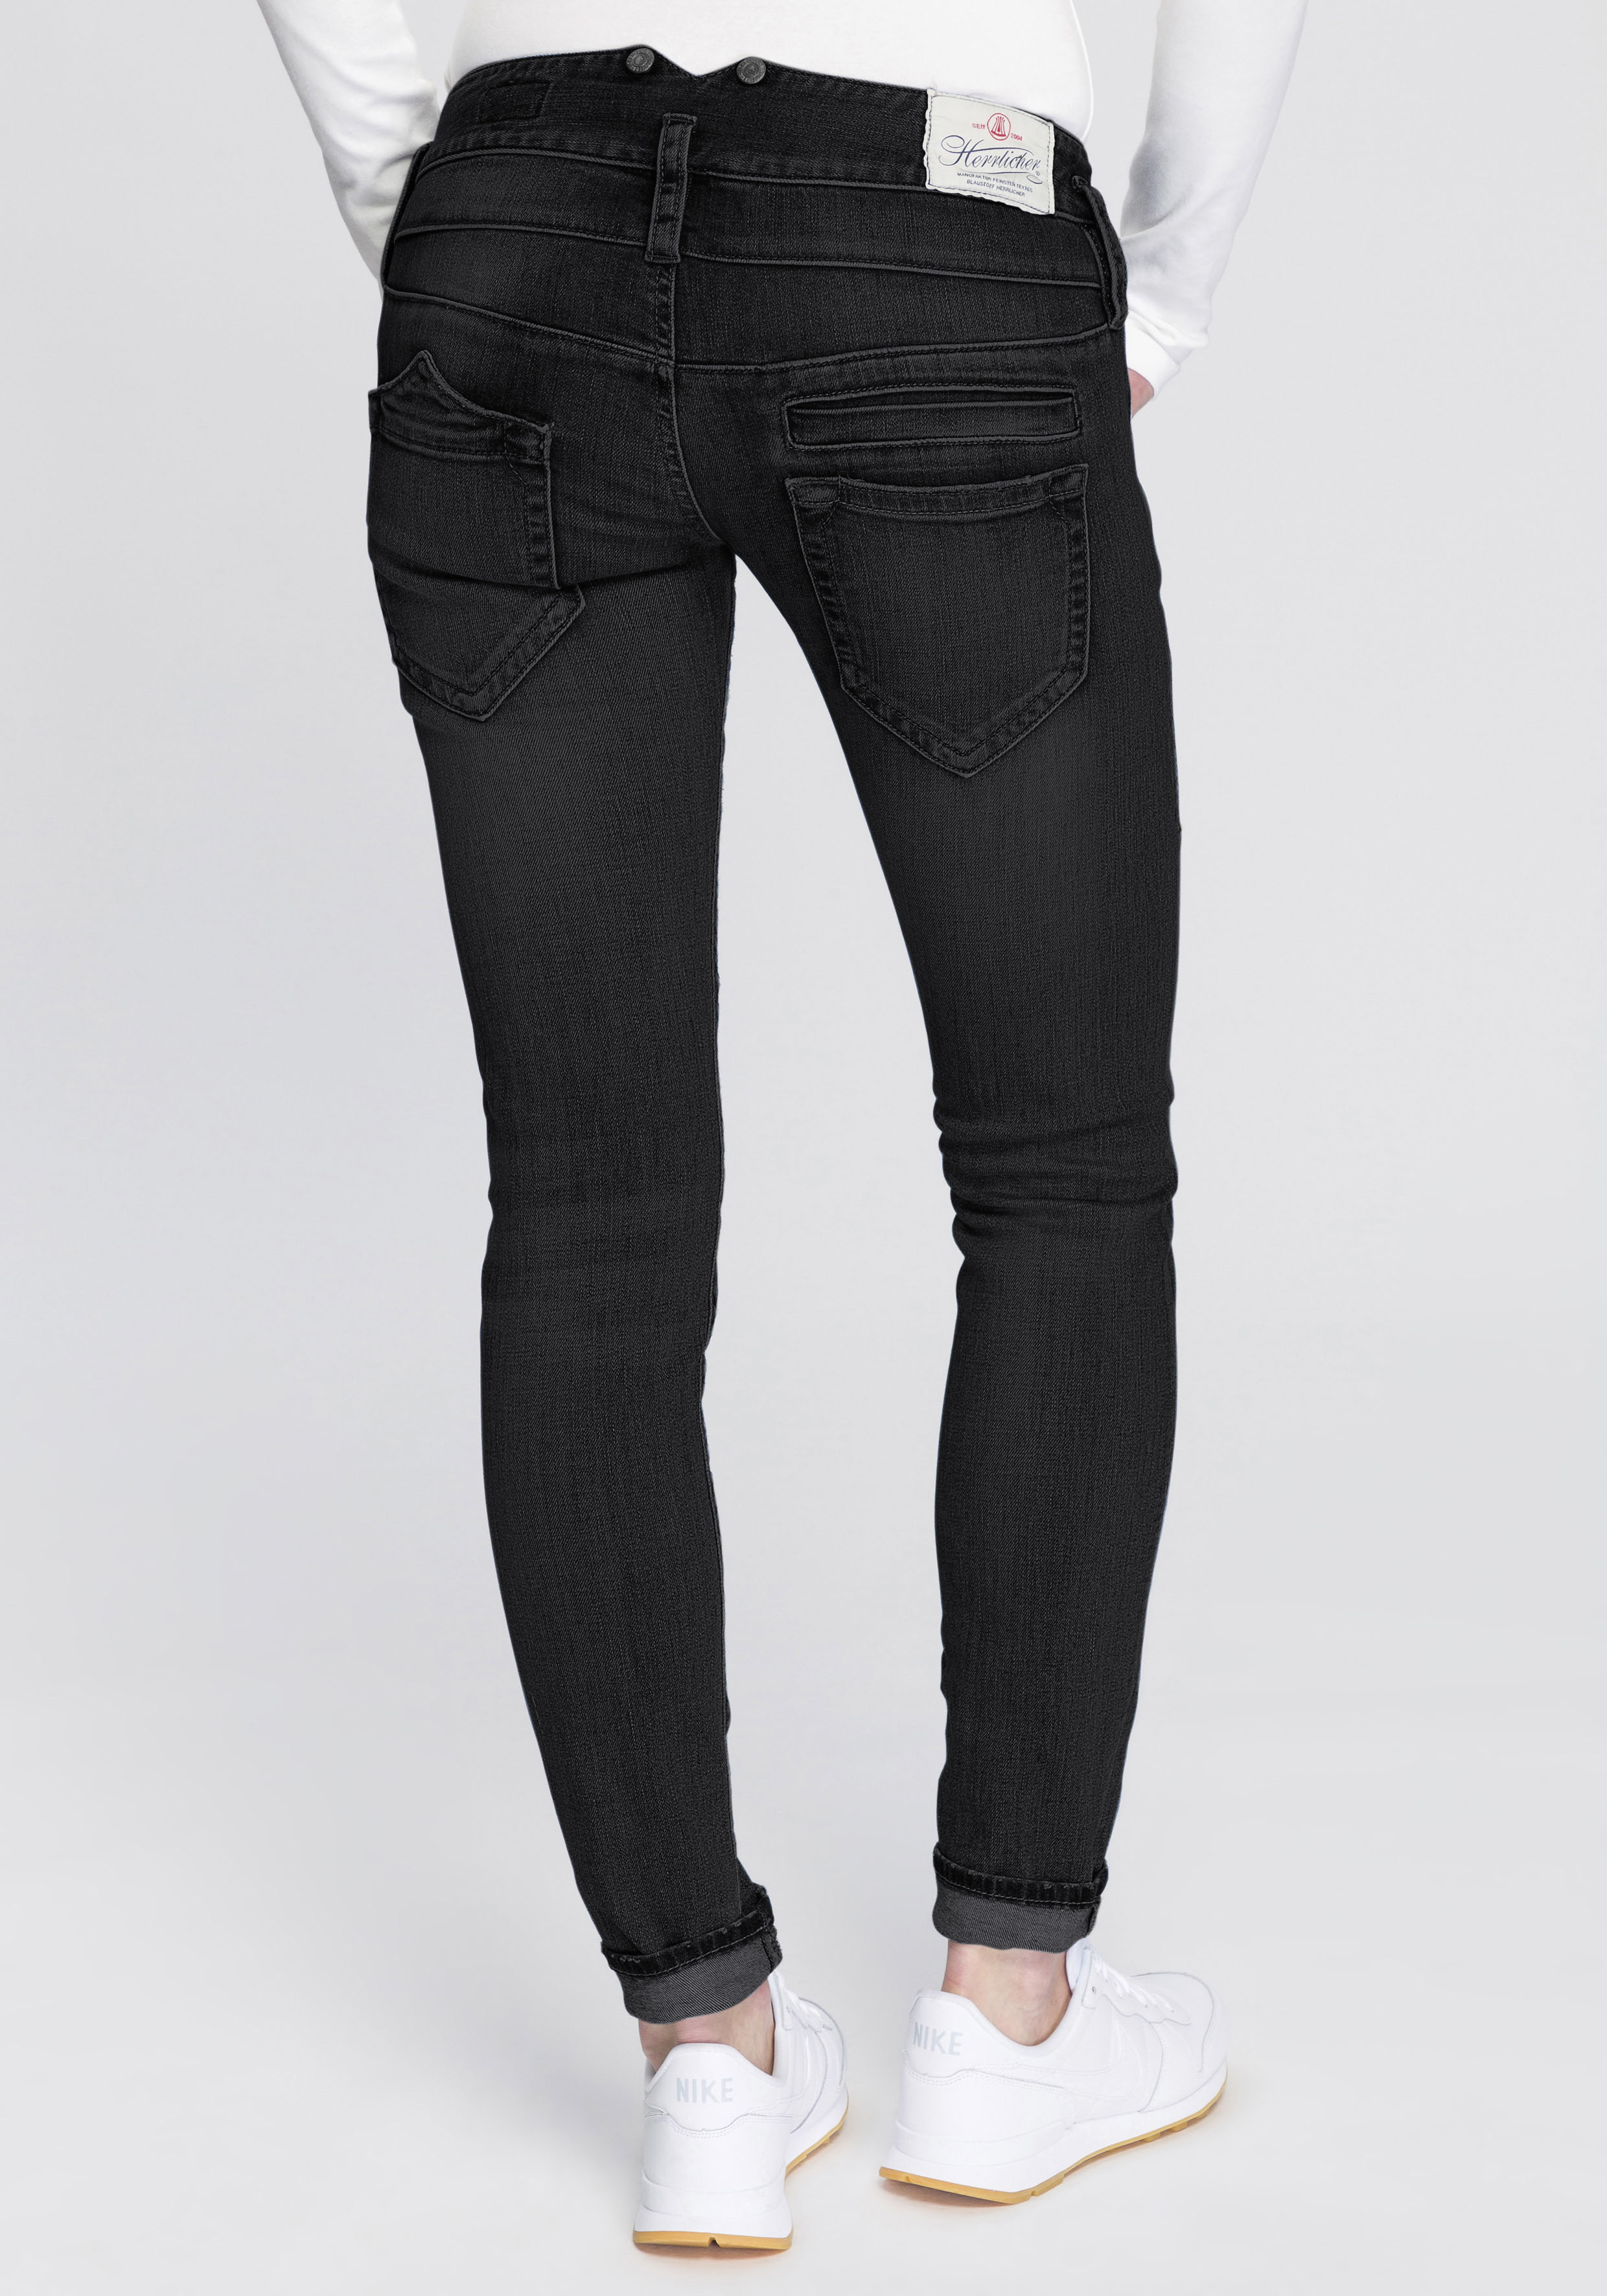 Herrlicher Pitch Slim Reused Denim Black Jeans (27W/30L, Tempest)